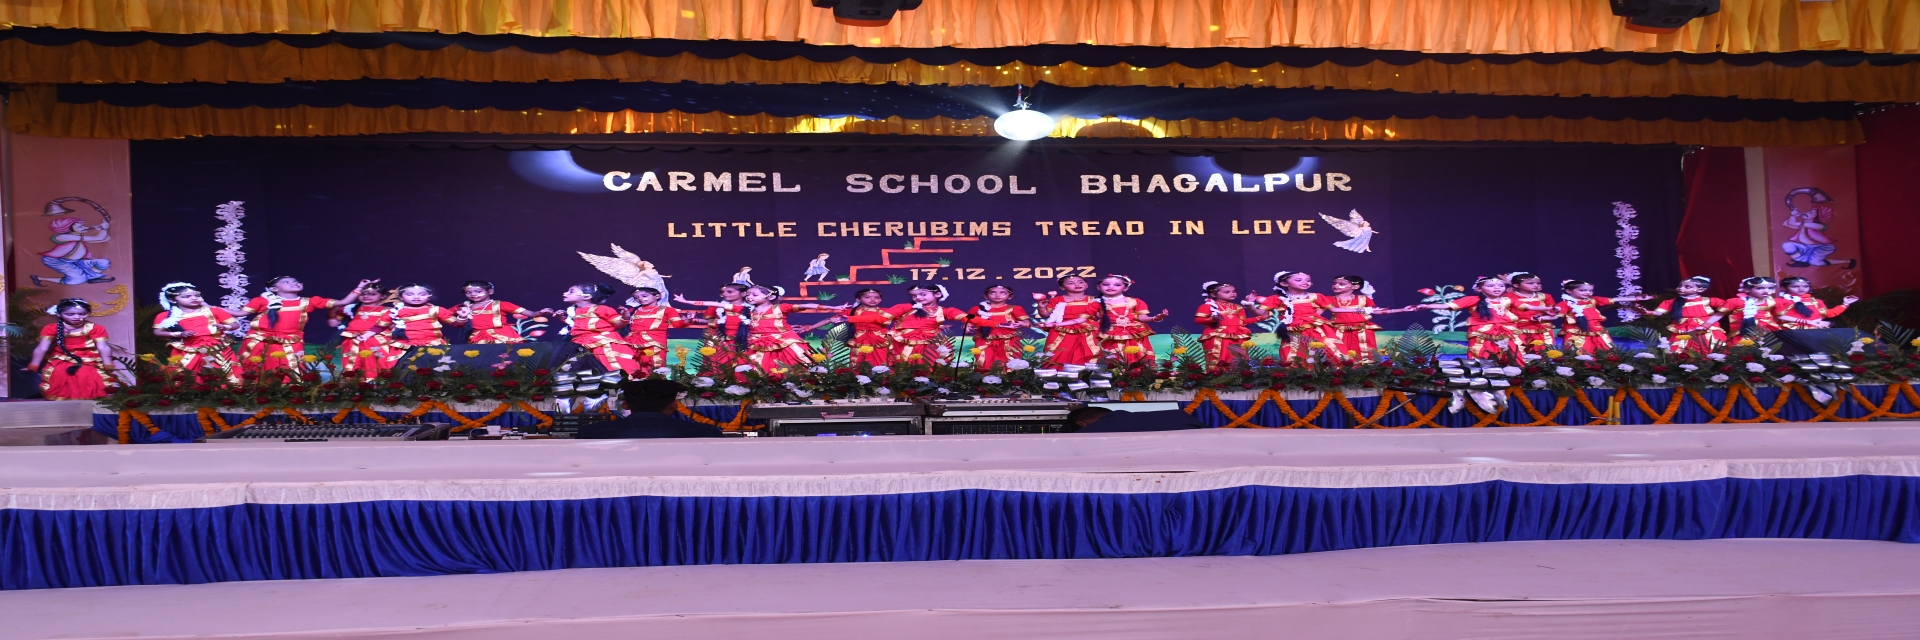 Carmel School Bhagalpur